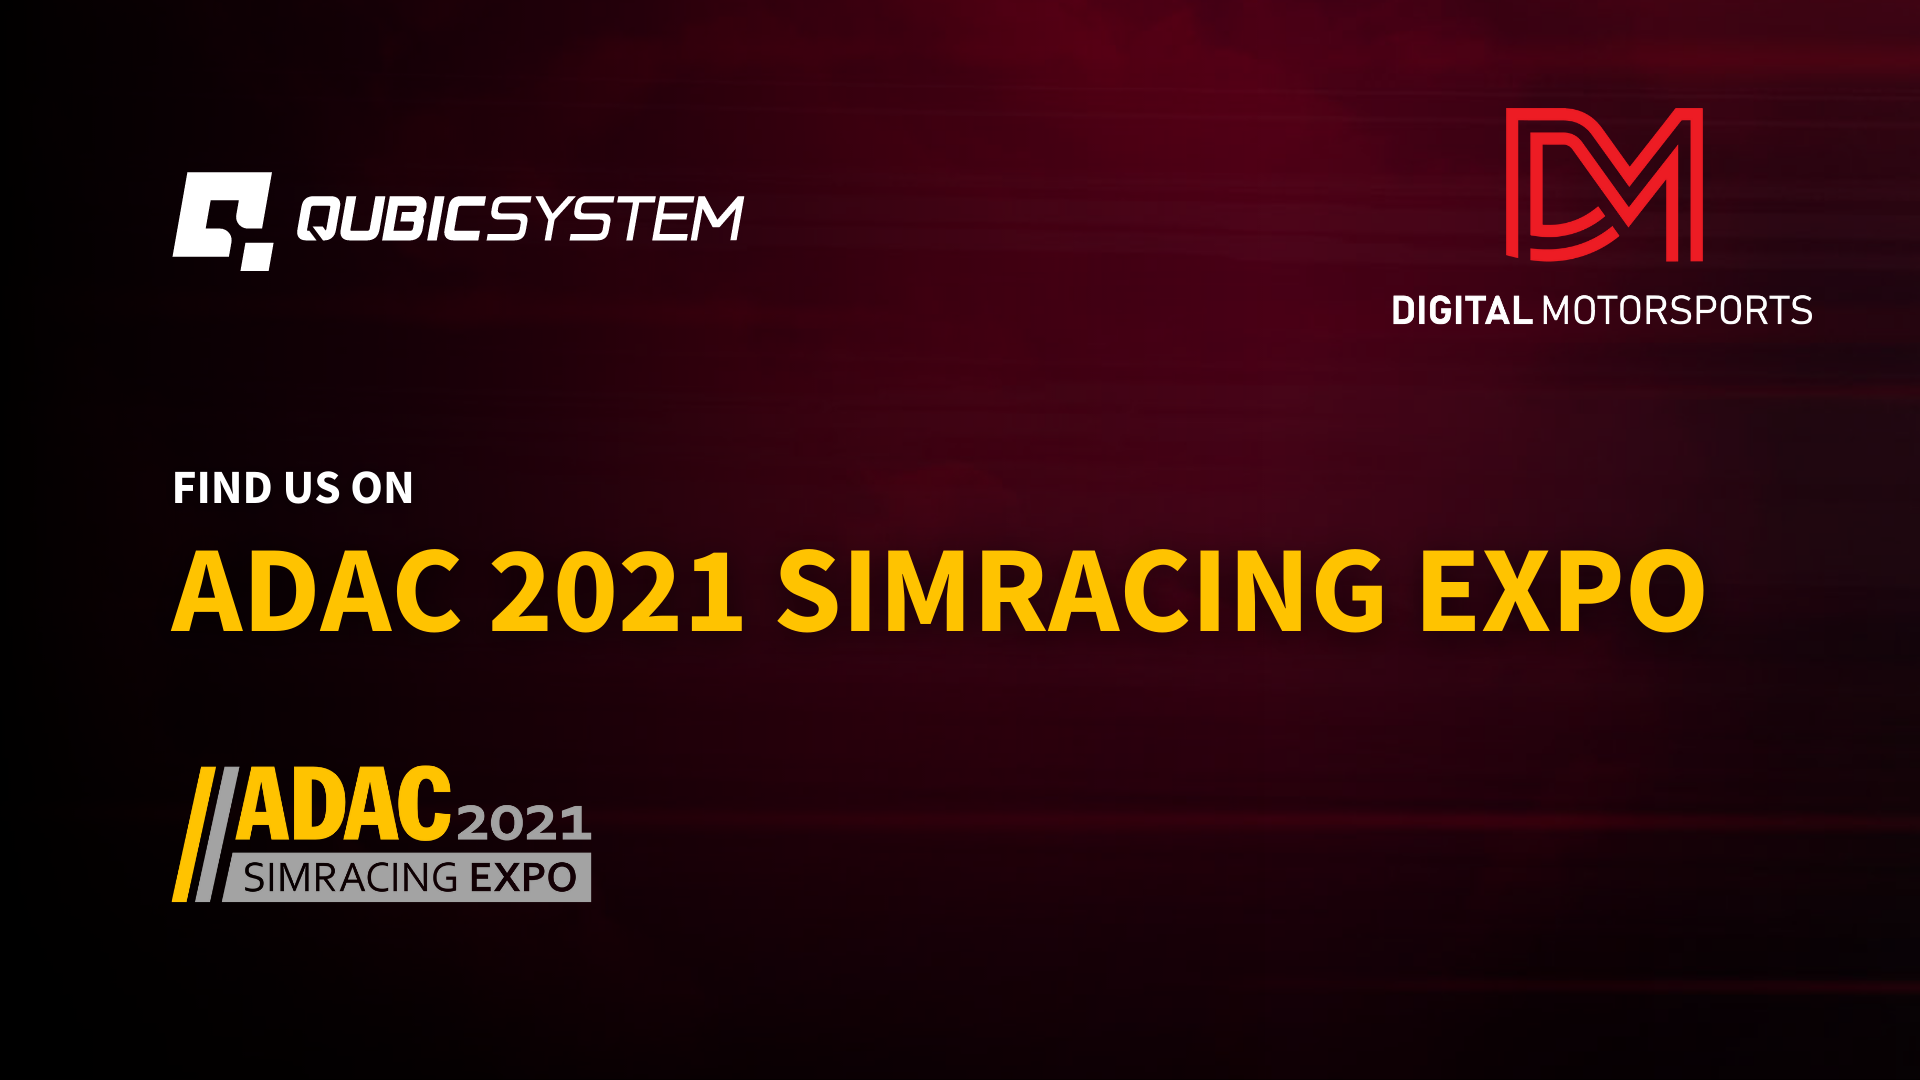 ADAC SimRacing Expo 2021